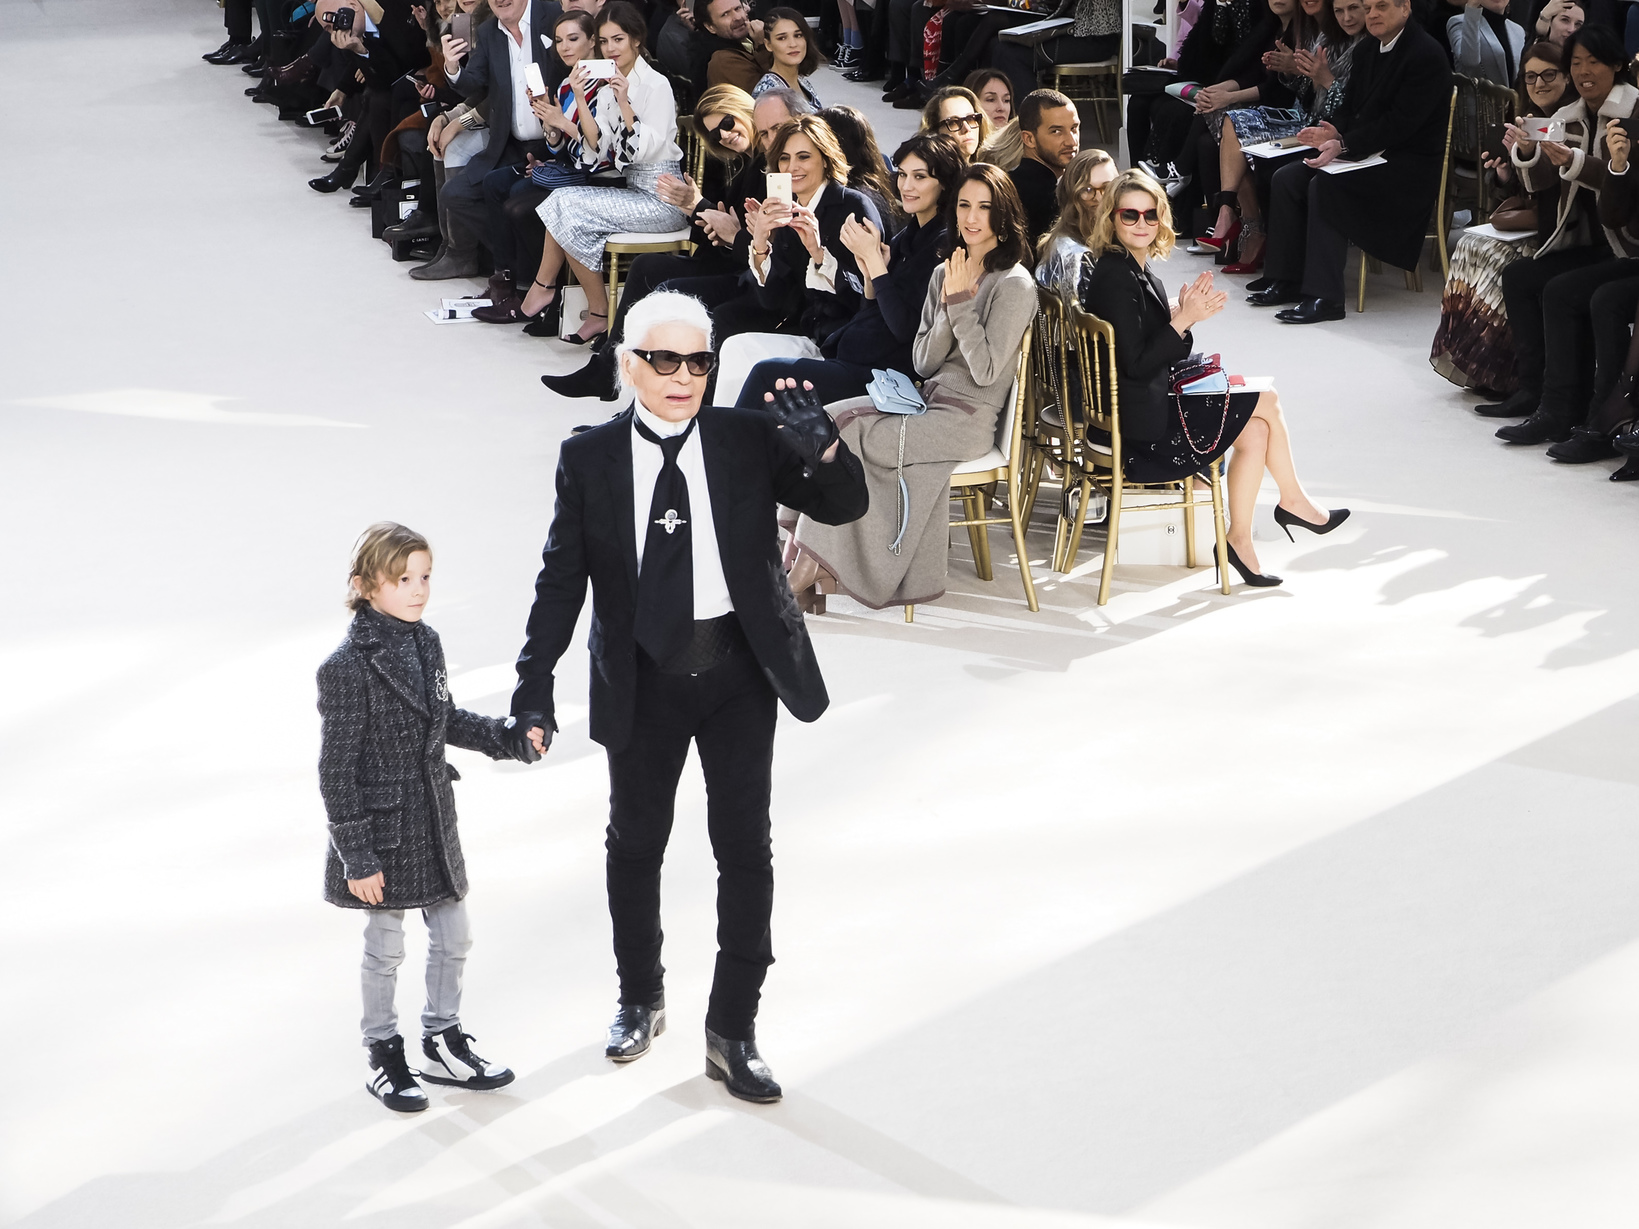 Fashion icon and Chanel designer Karl Lagerfeld dies aged 85